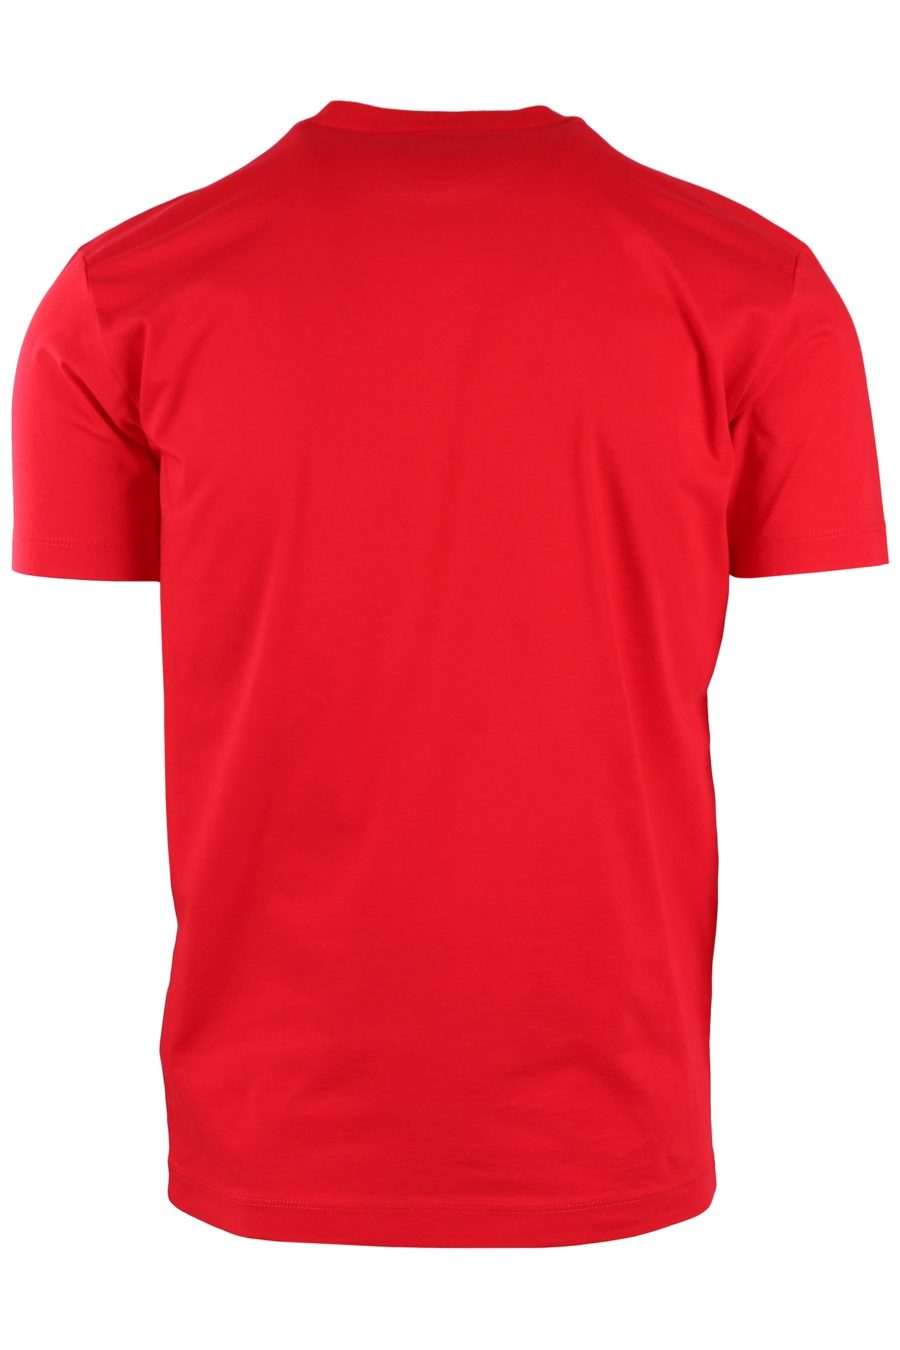 Camiseta Dsquared2 roja con logo grande "Icon" - 0045cd81ce58a23514d5072af5678a85f442ebad